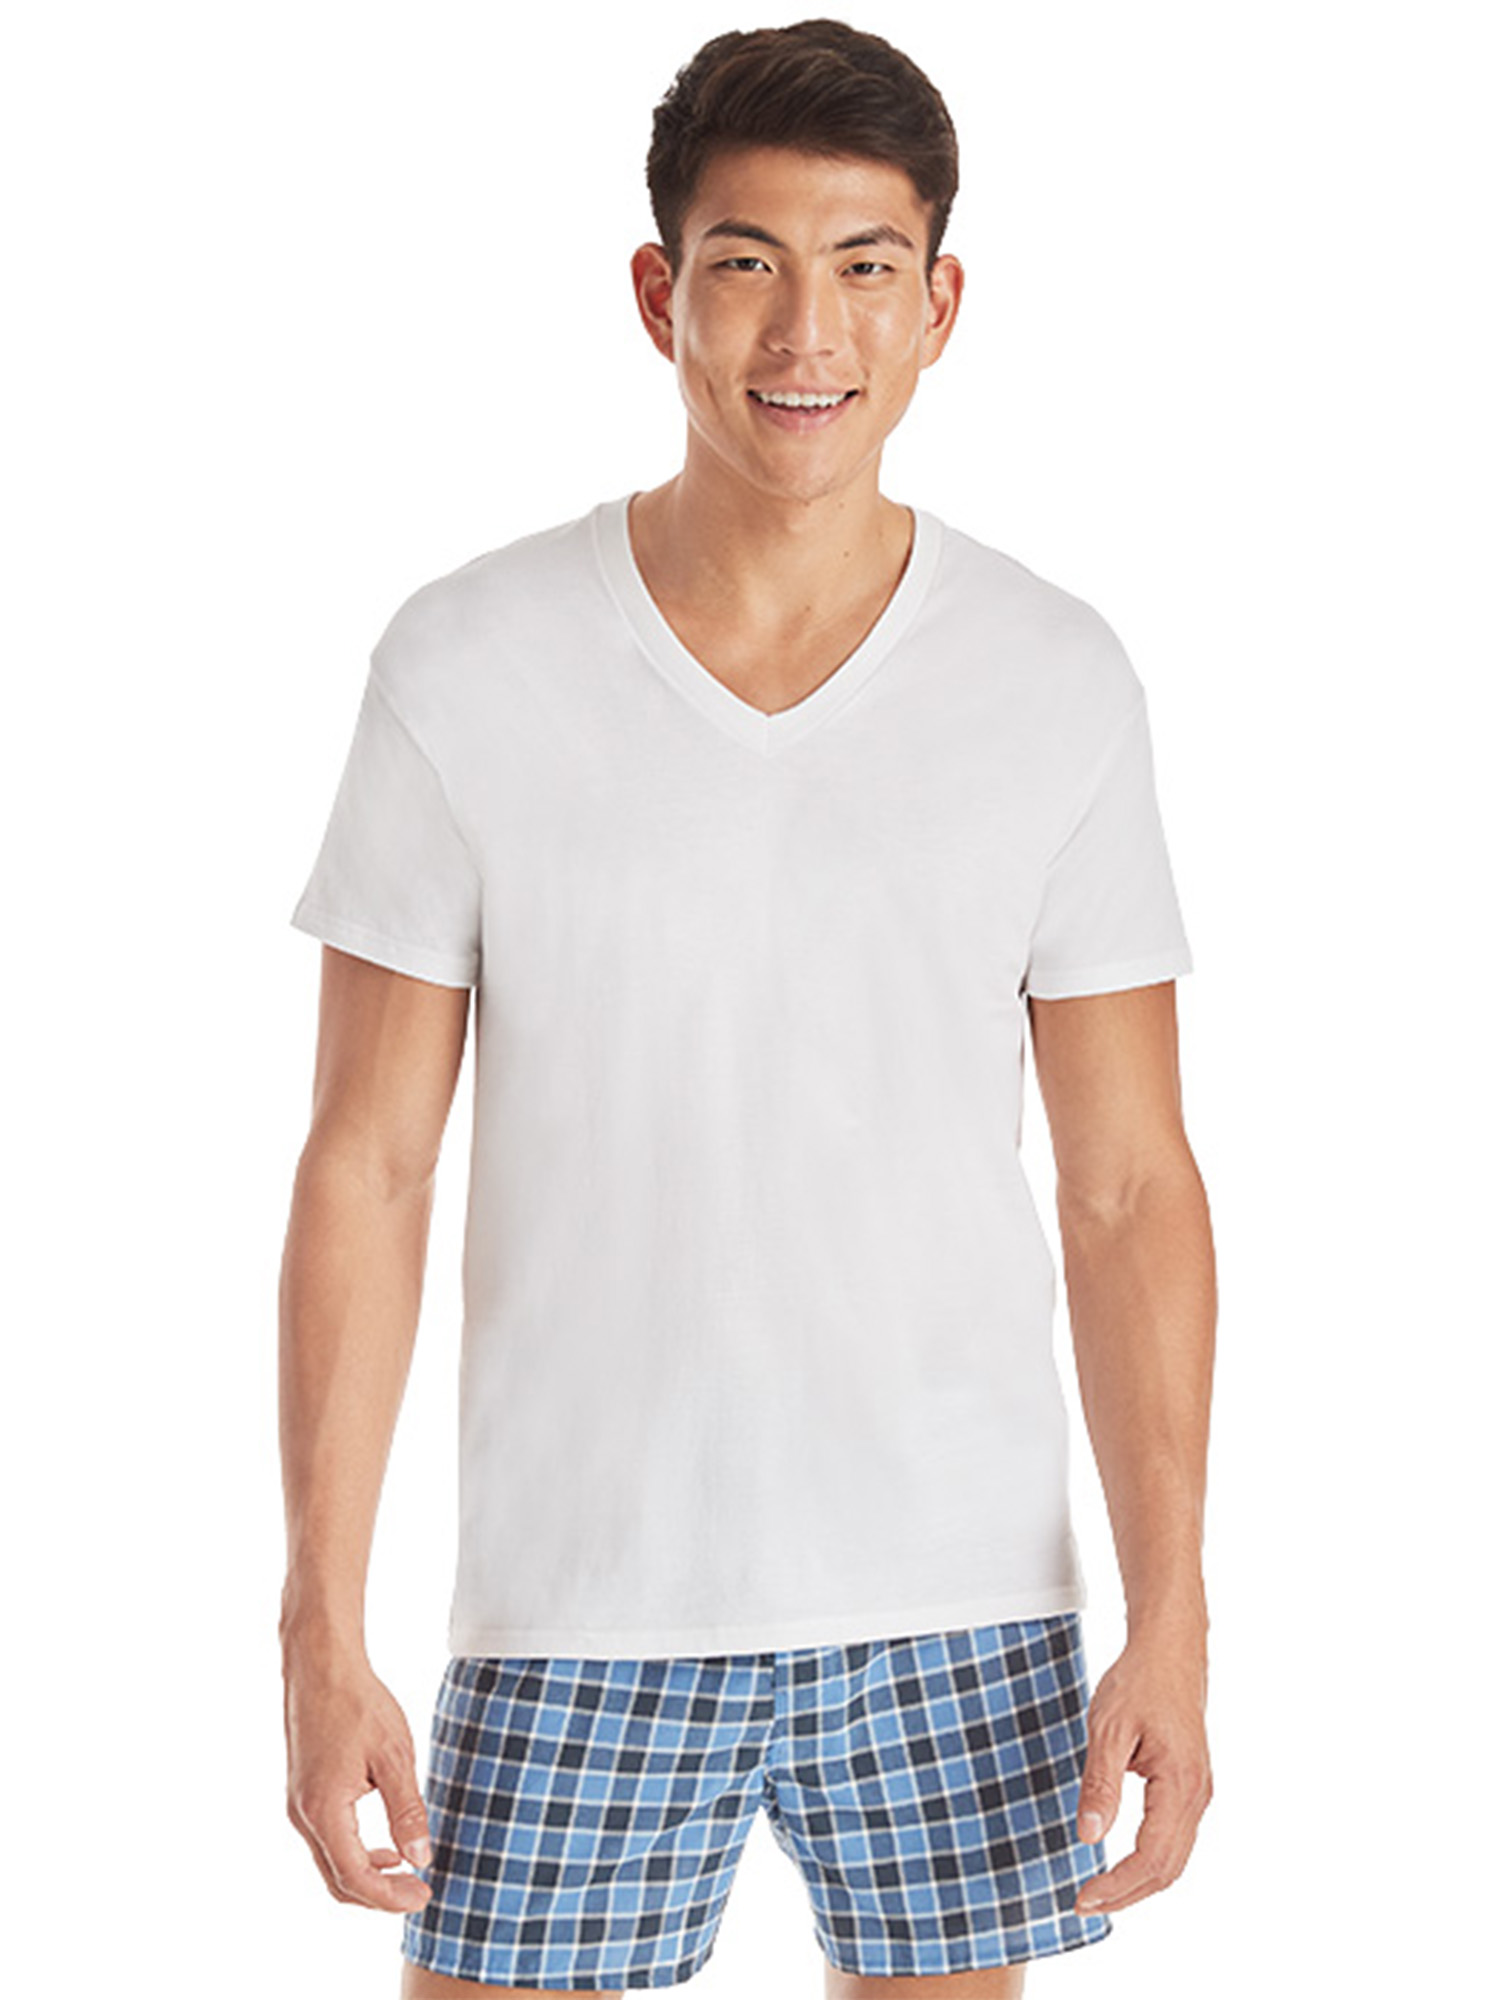 Hanes Men's Super Value Pack White V-Neck Undershirts, 10 Pack - image 3 of 9